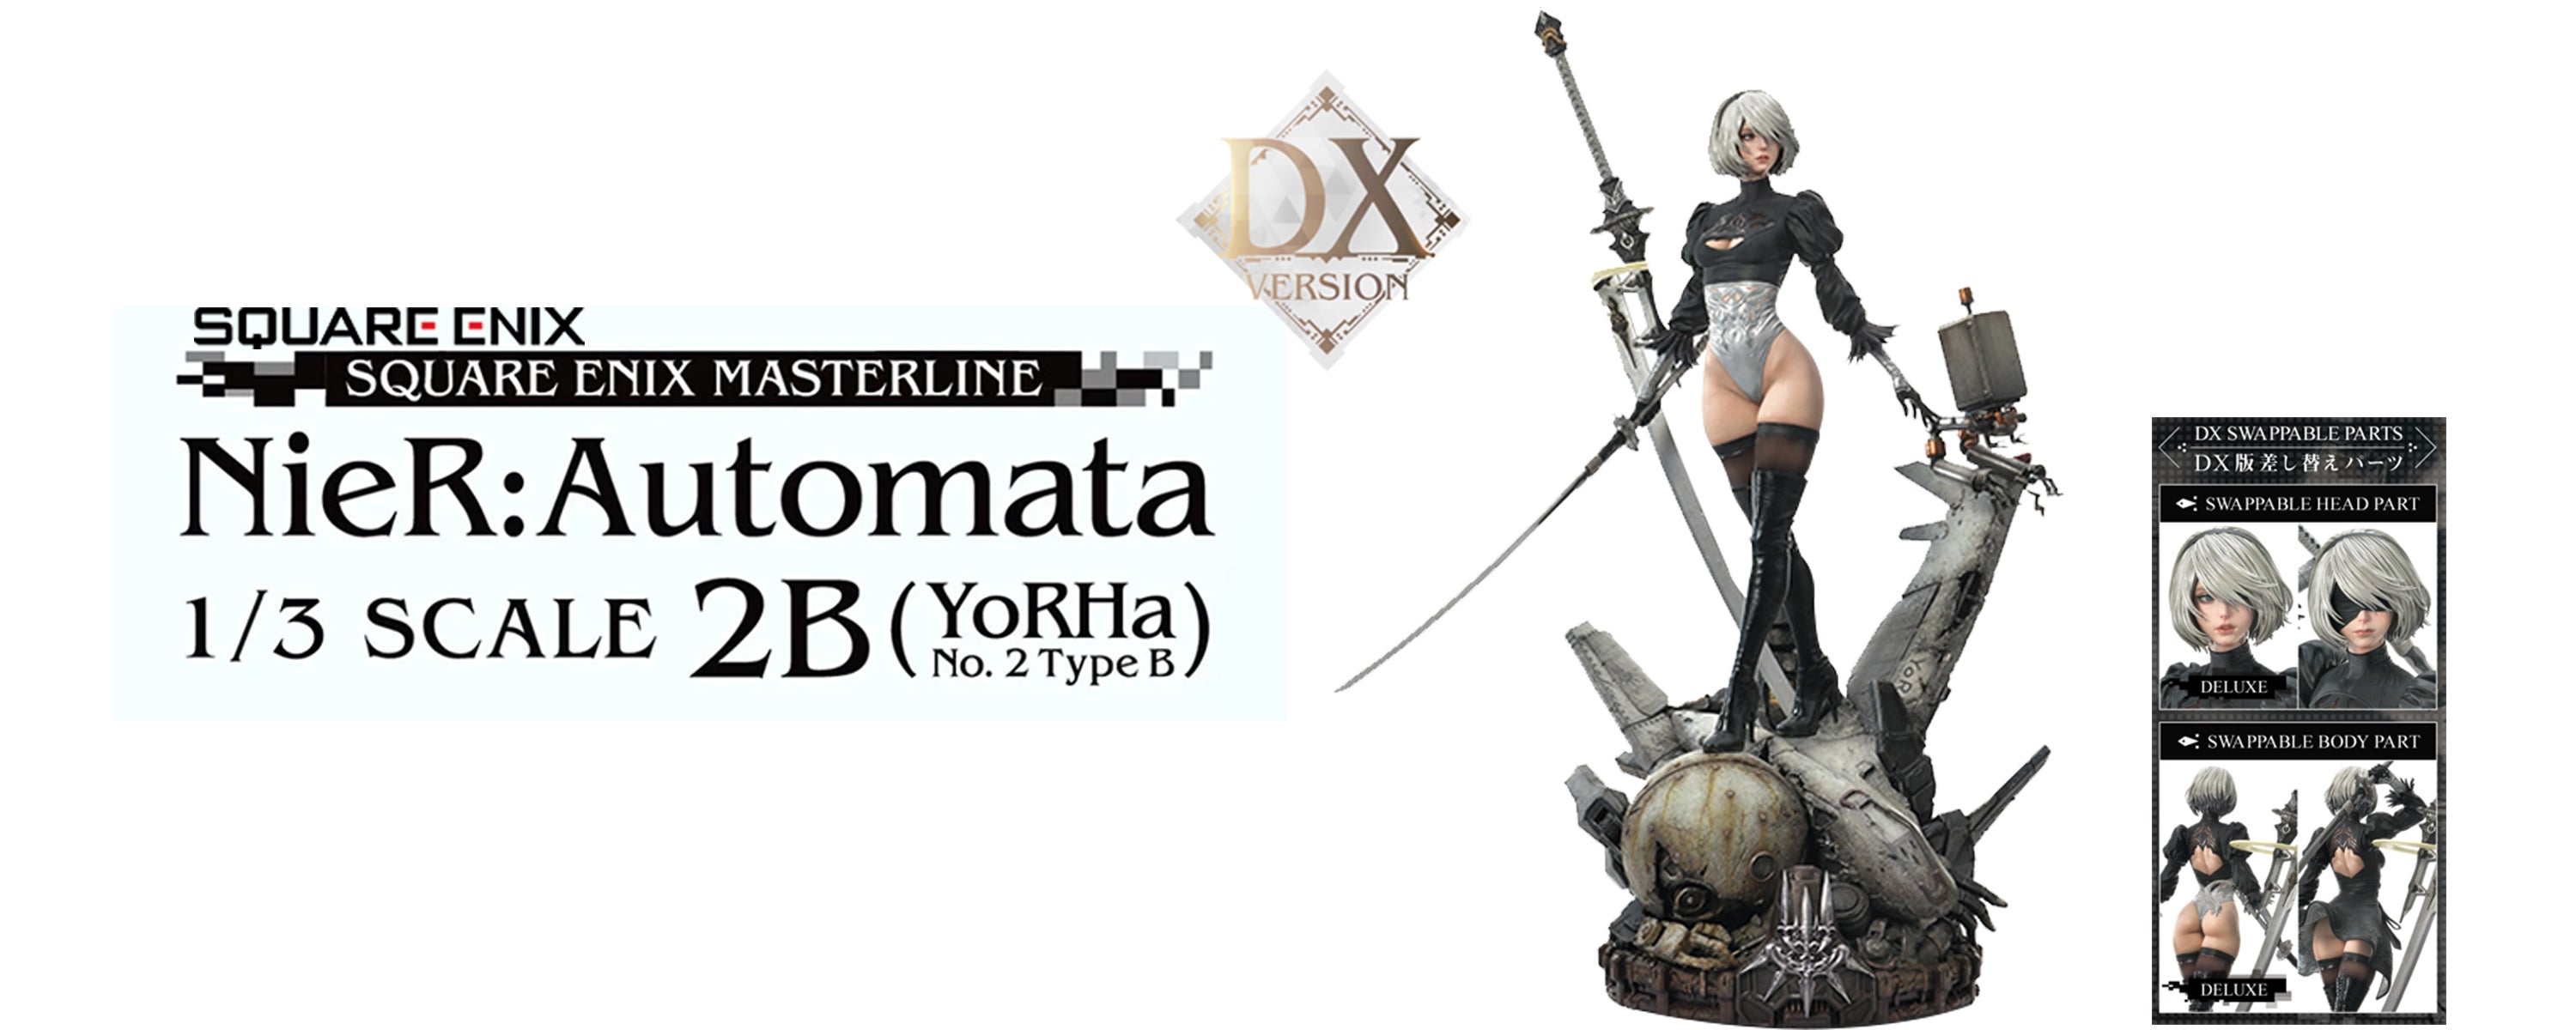 Square Enix Masterline NieR: Automata 2B (YoRHa No. 2 Type B): Deluxe Ver.  1/3 Scale Statue: SQUARE ENIX 10% OFF - Tokyo Otaku Mode (TOM)